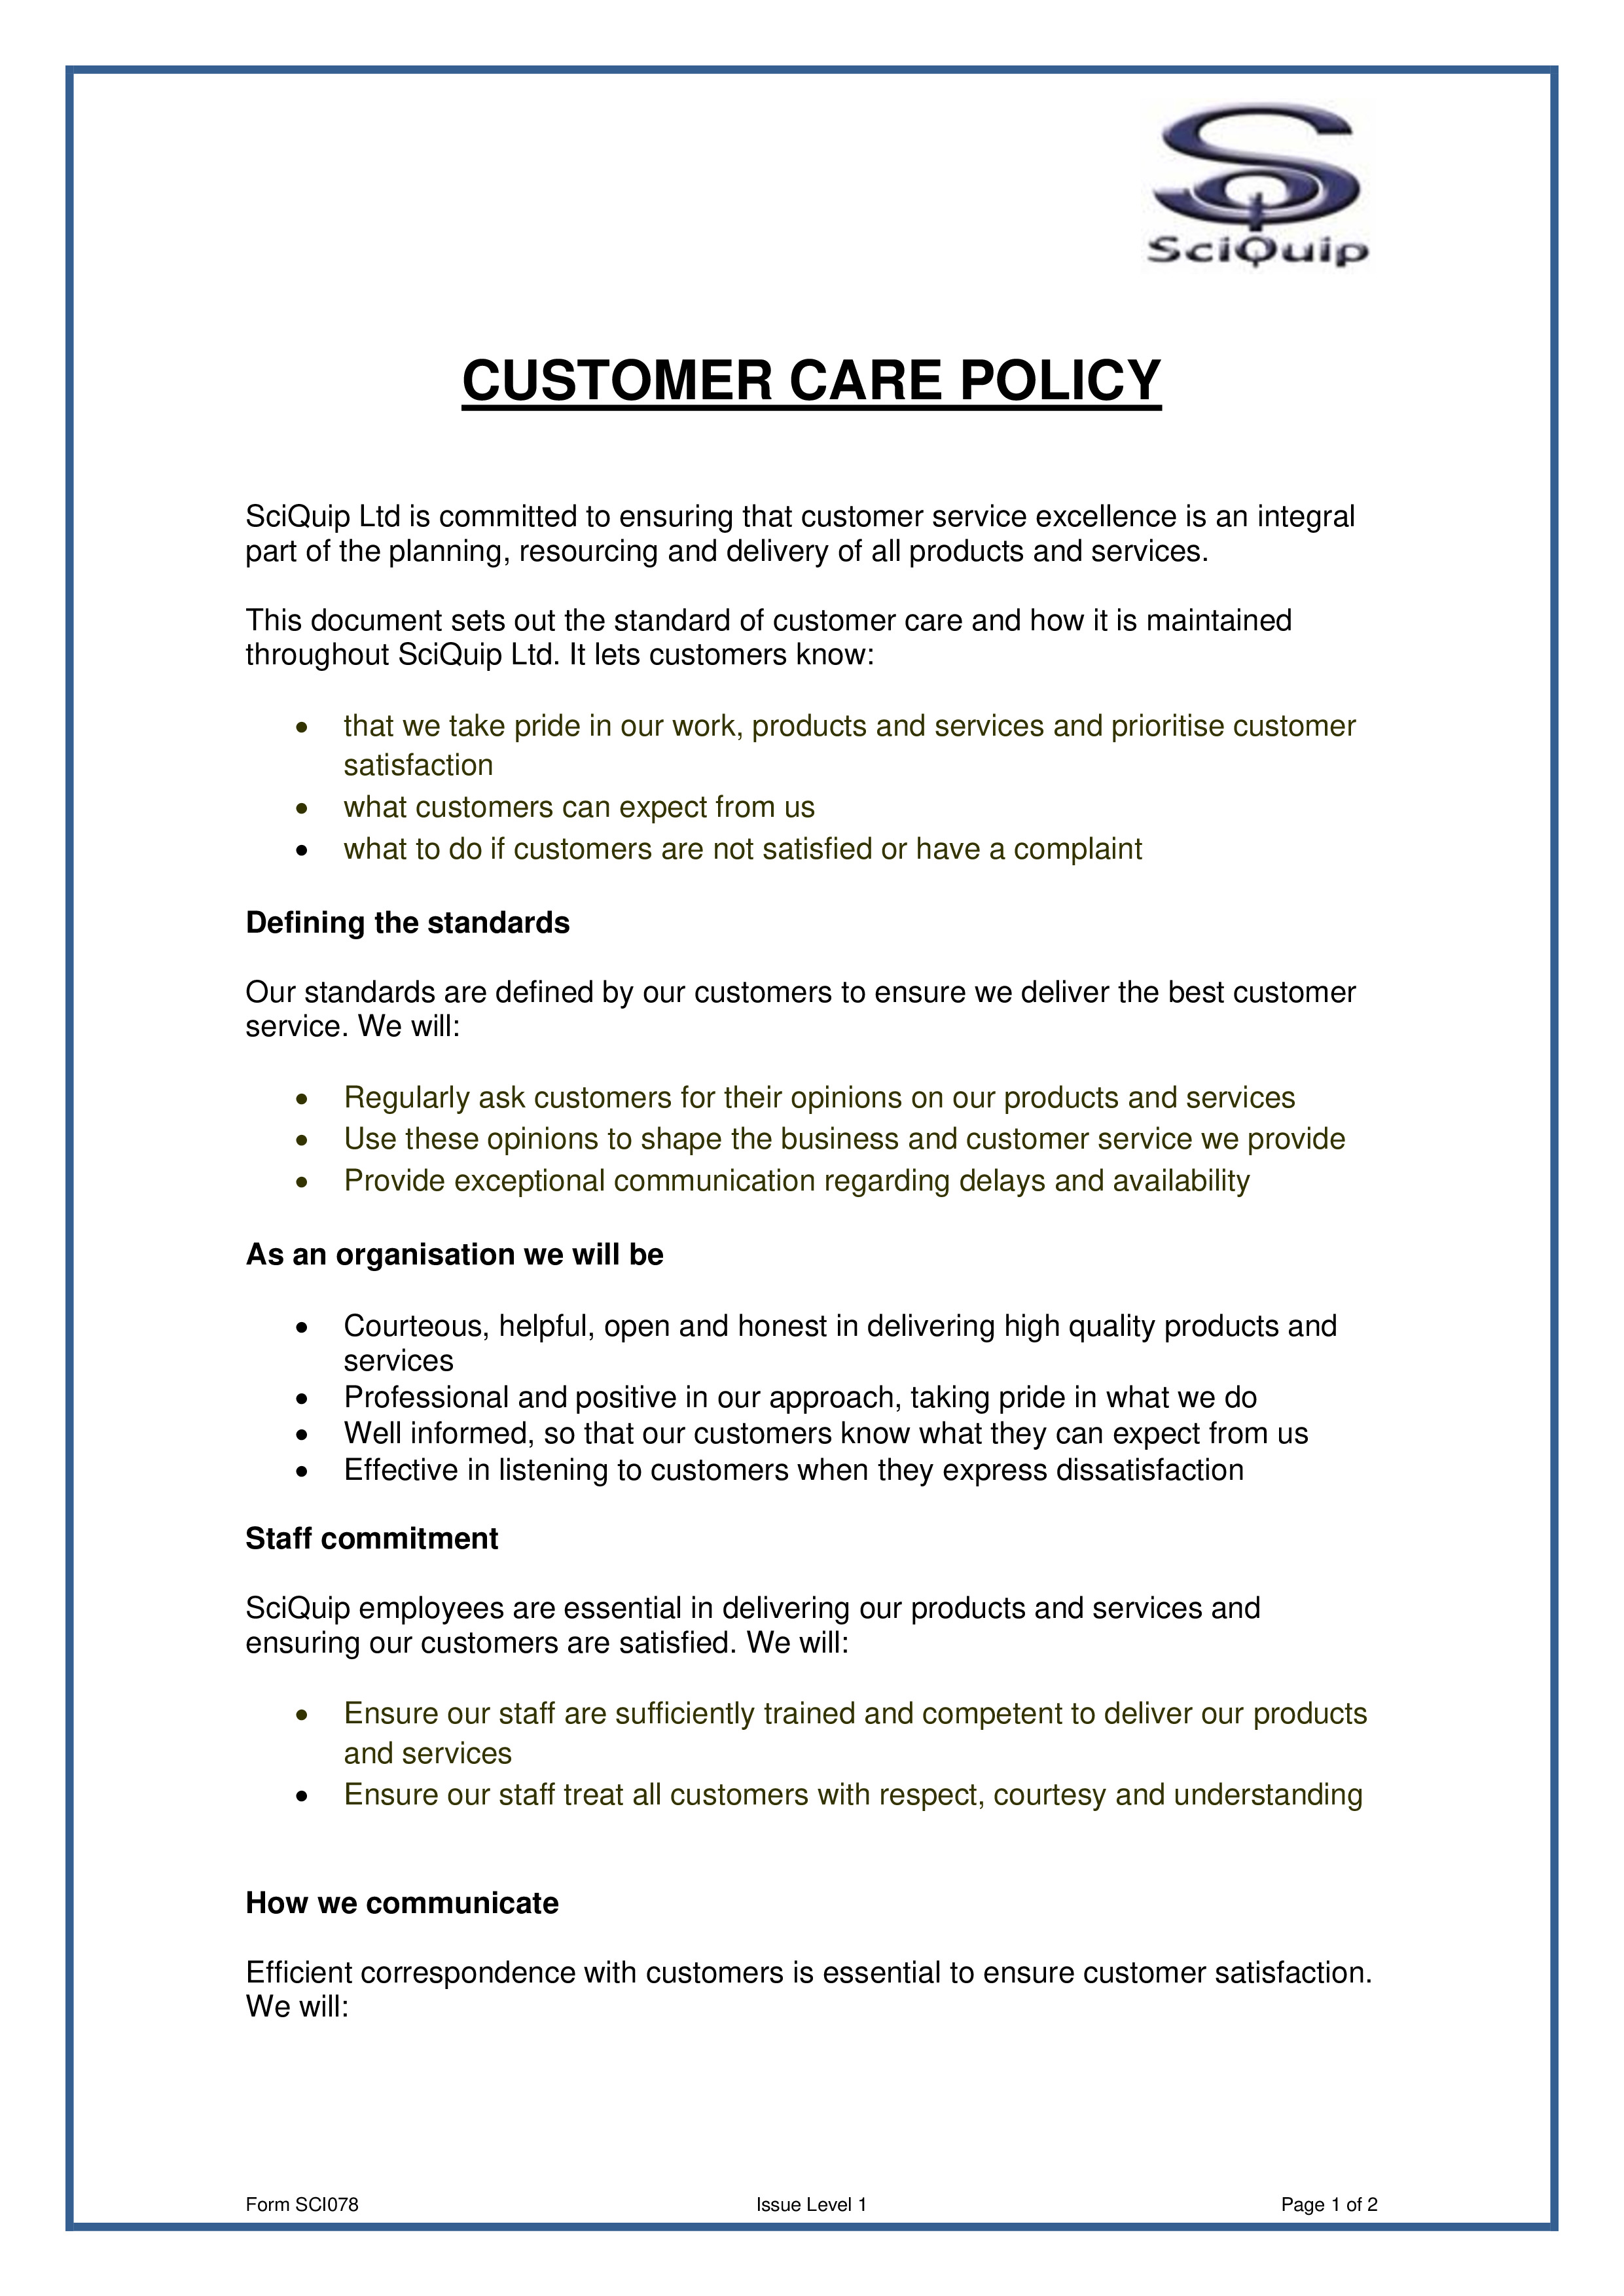 Customer Care Policy 